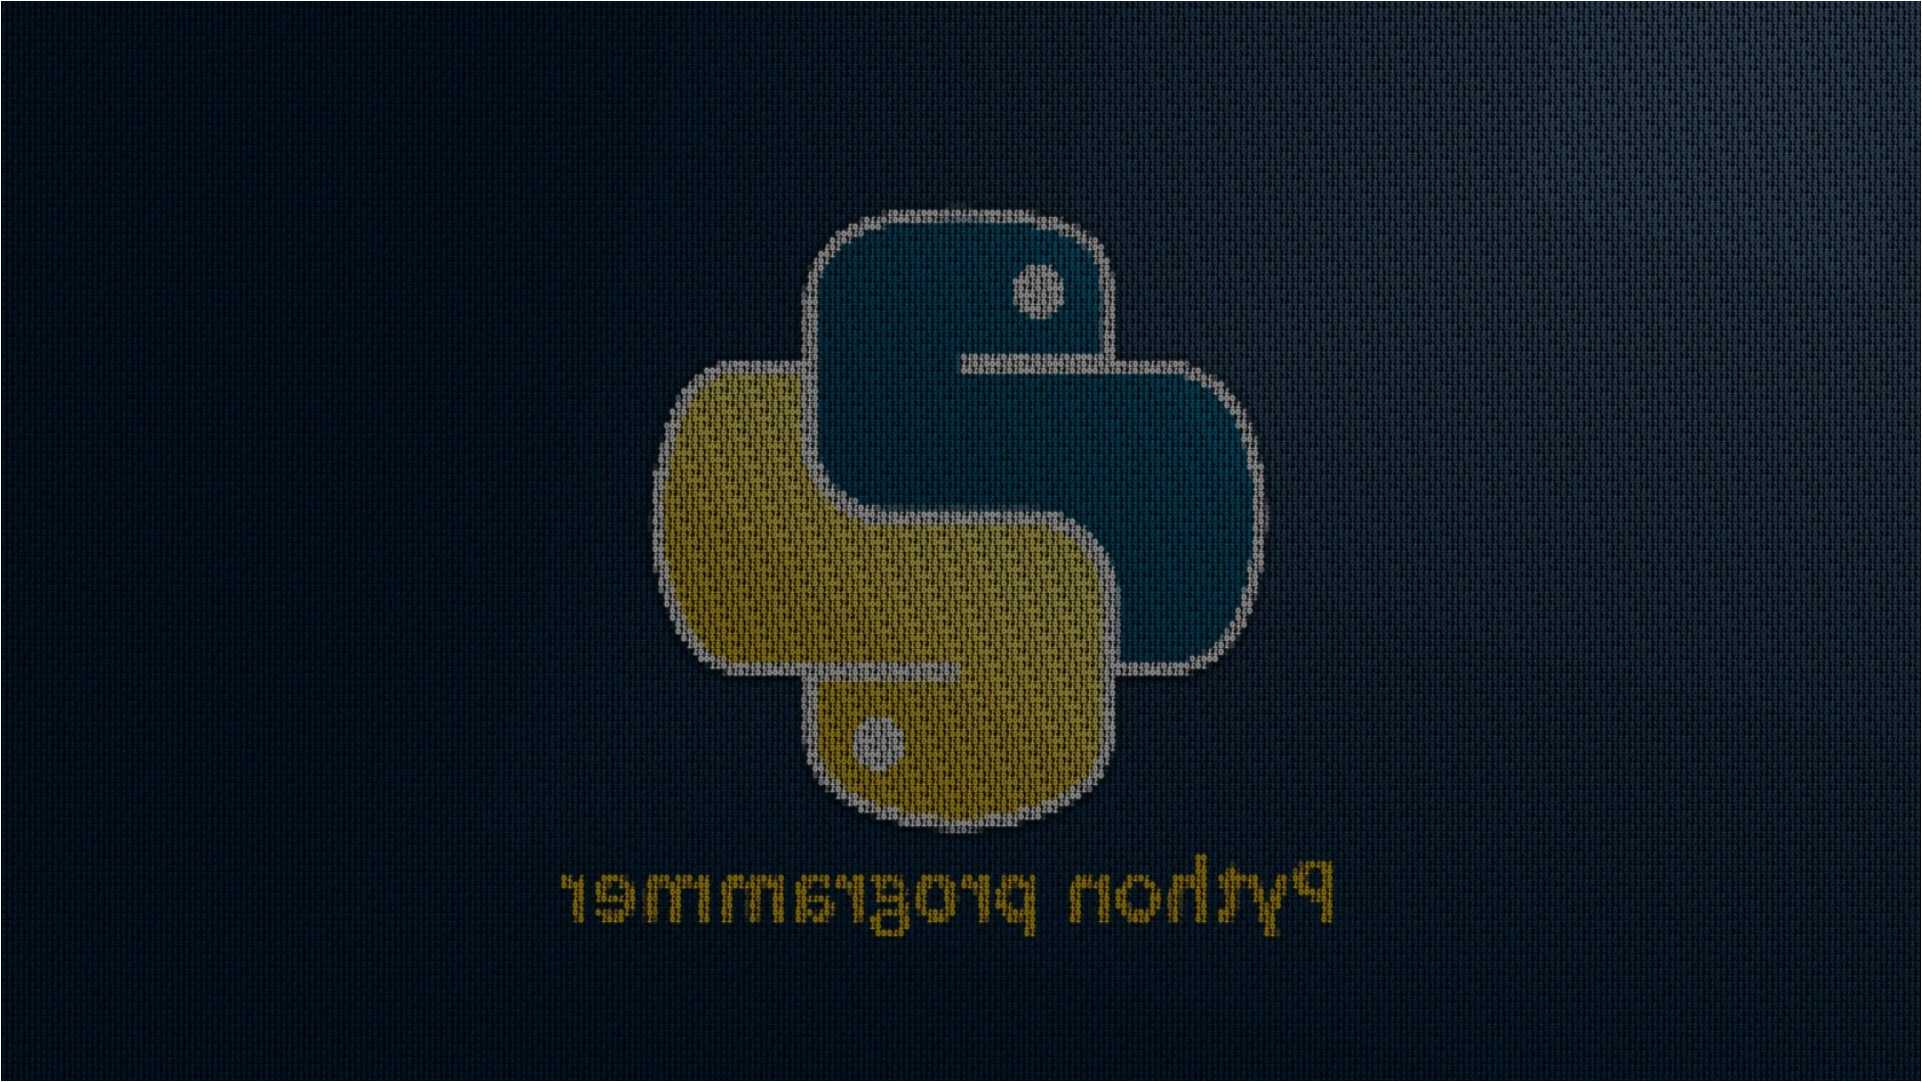 Python Wallpaper, High Resolution Desktop Image